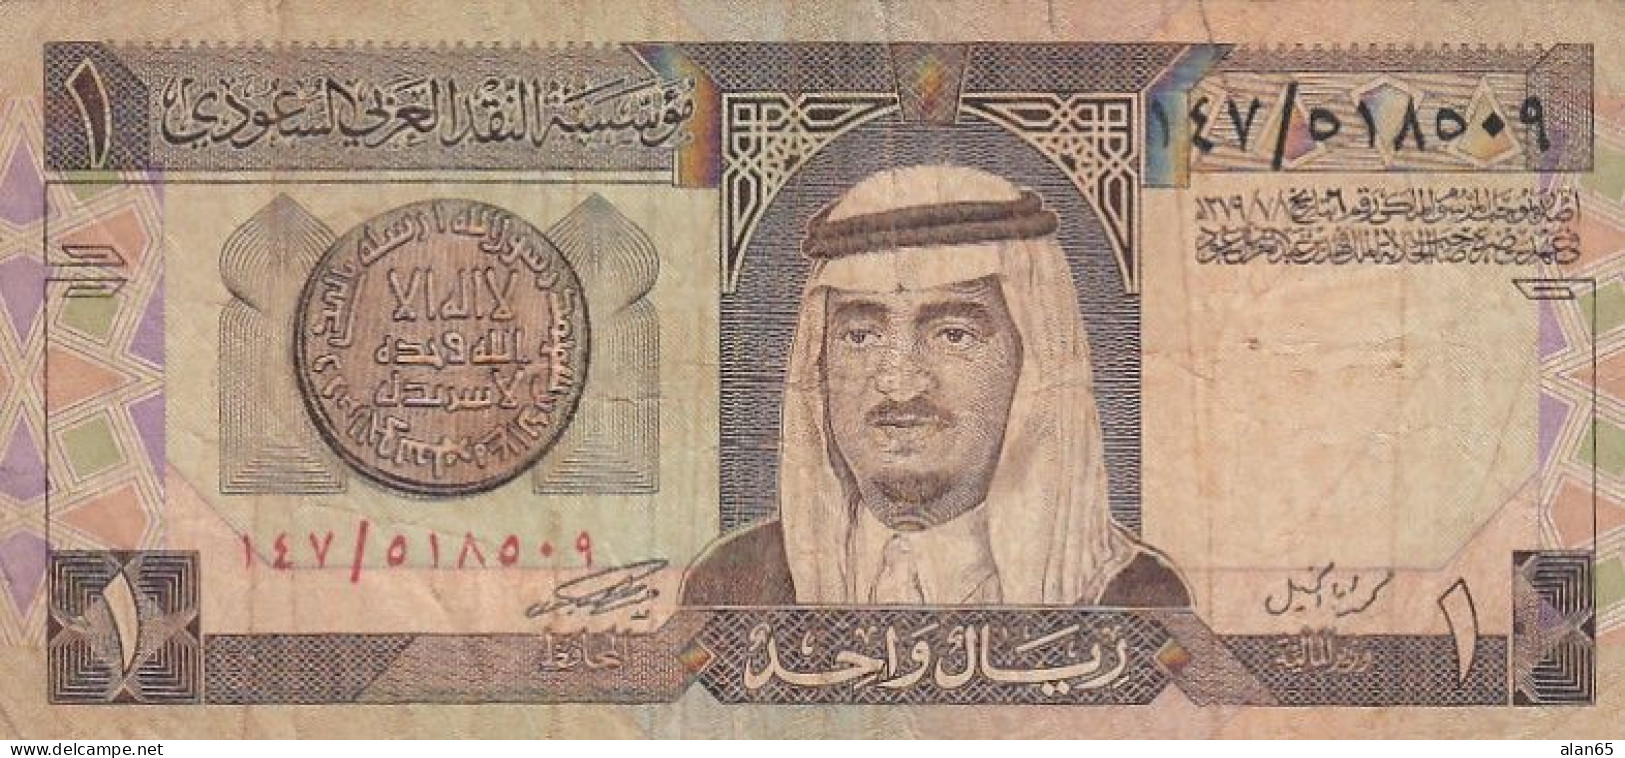 Saudi Arabia Lot Of 2, #21b 1 Riyal 1984 Banknote And #22a 5 Riyal 1983 Banknote - Arabia Saudita